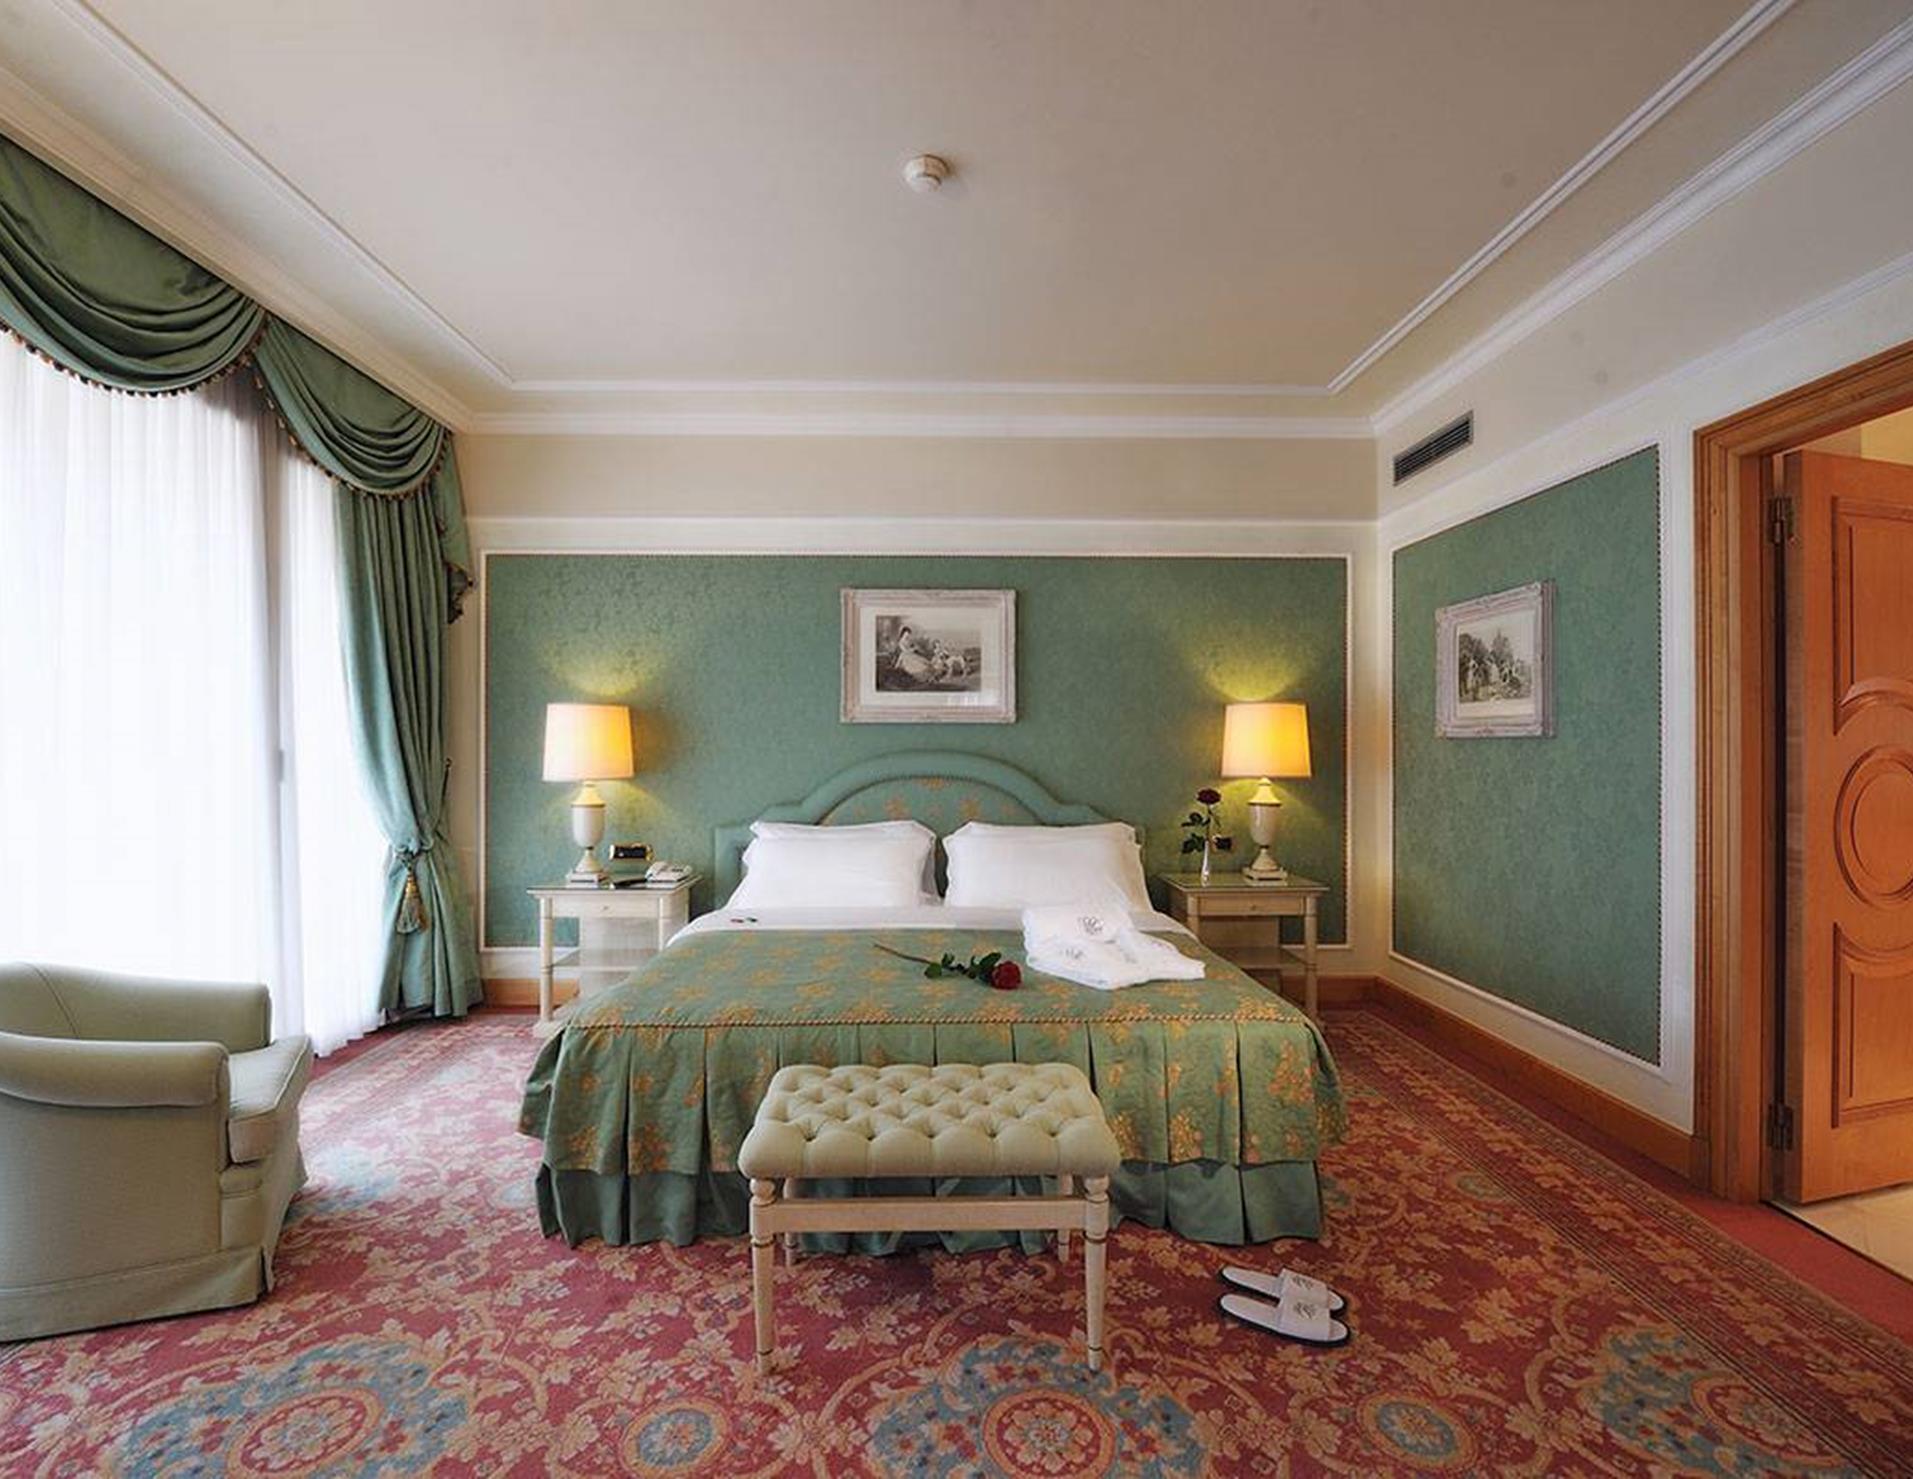 Royal Hotel Carlton - Room 4